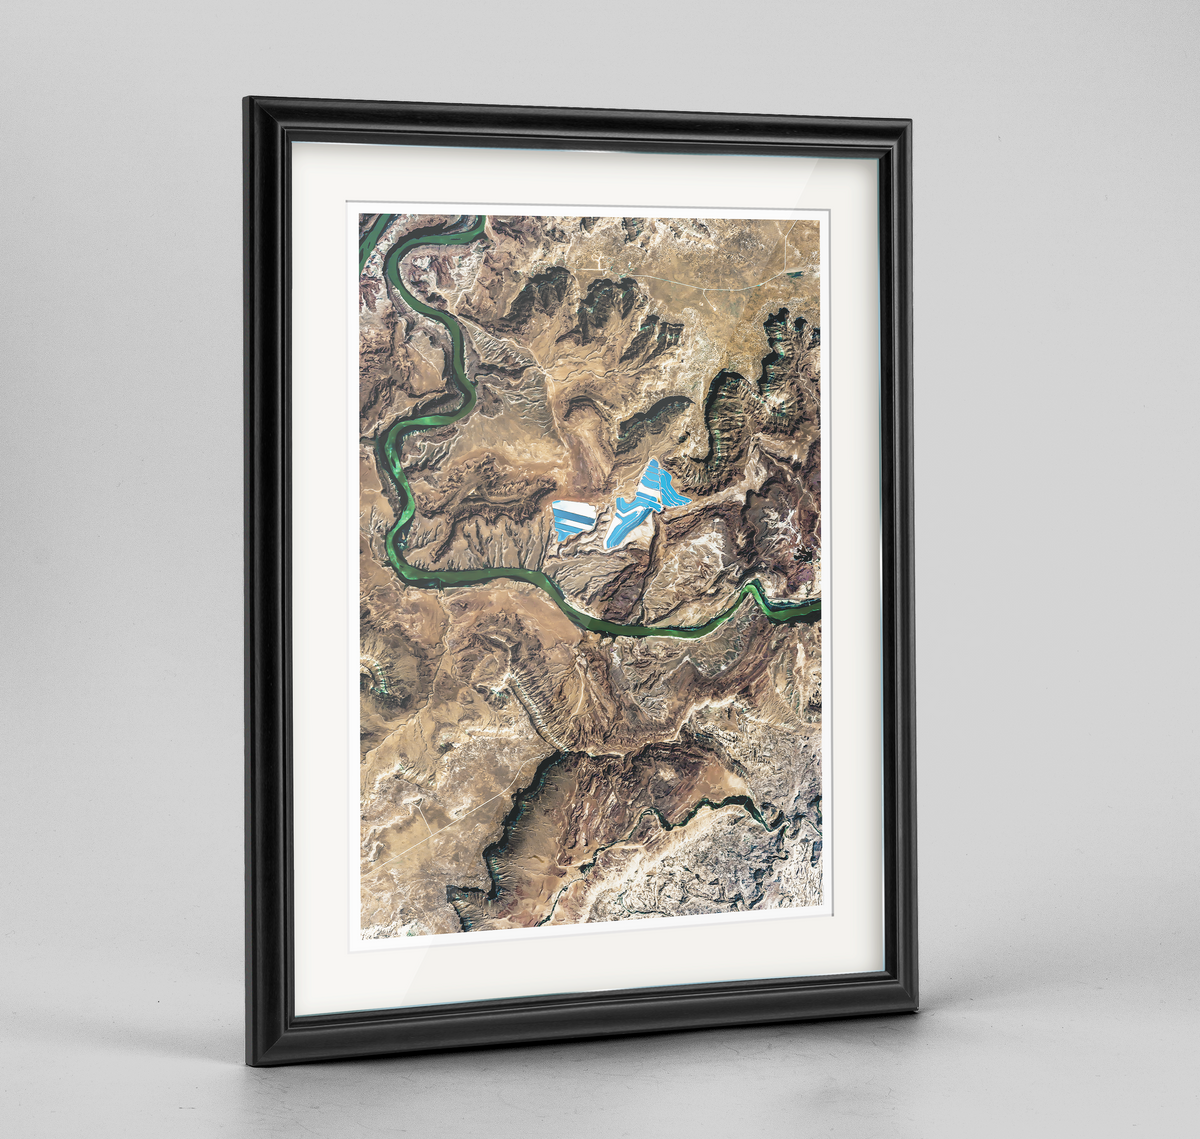 Moab Utah Earth Photography Art Print - Framed